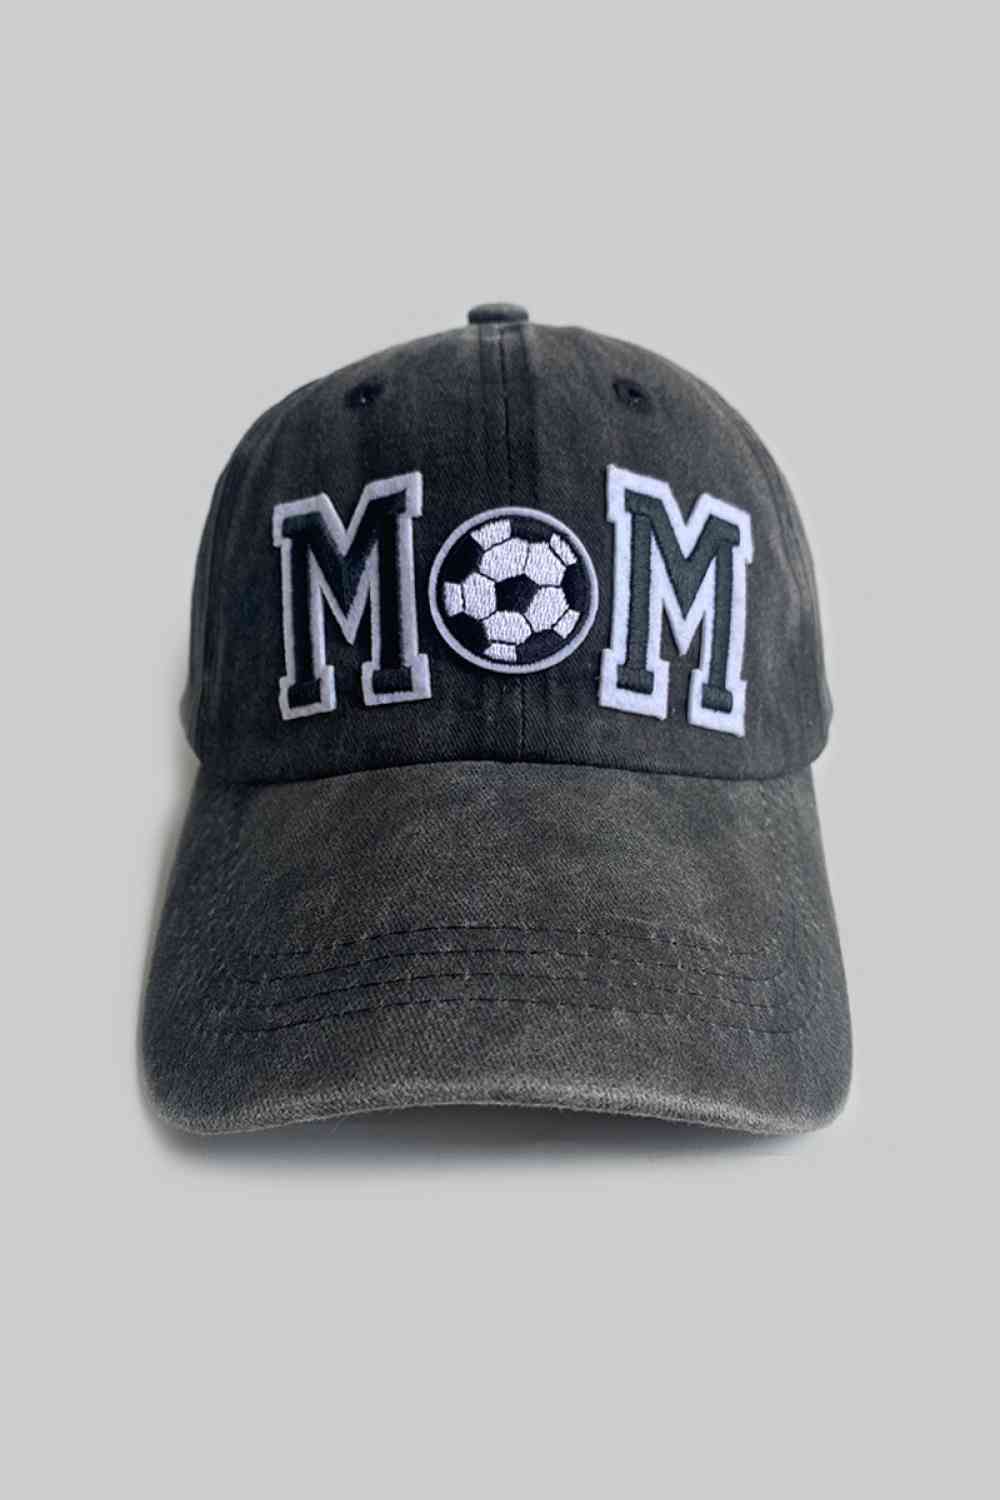 MOM Baseball Cap Charcoal One Size 